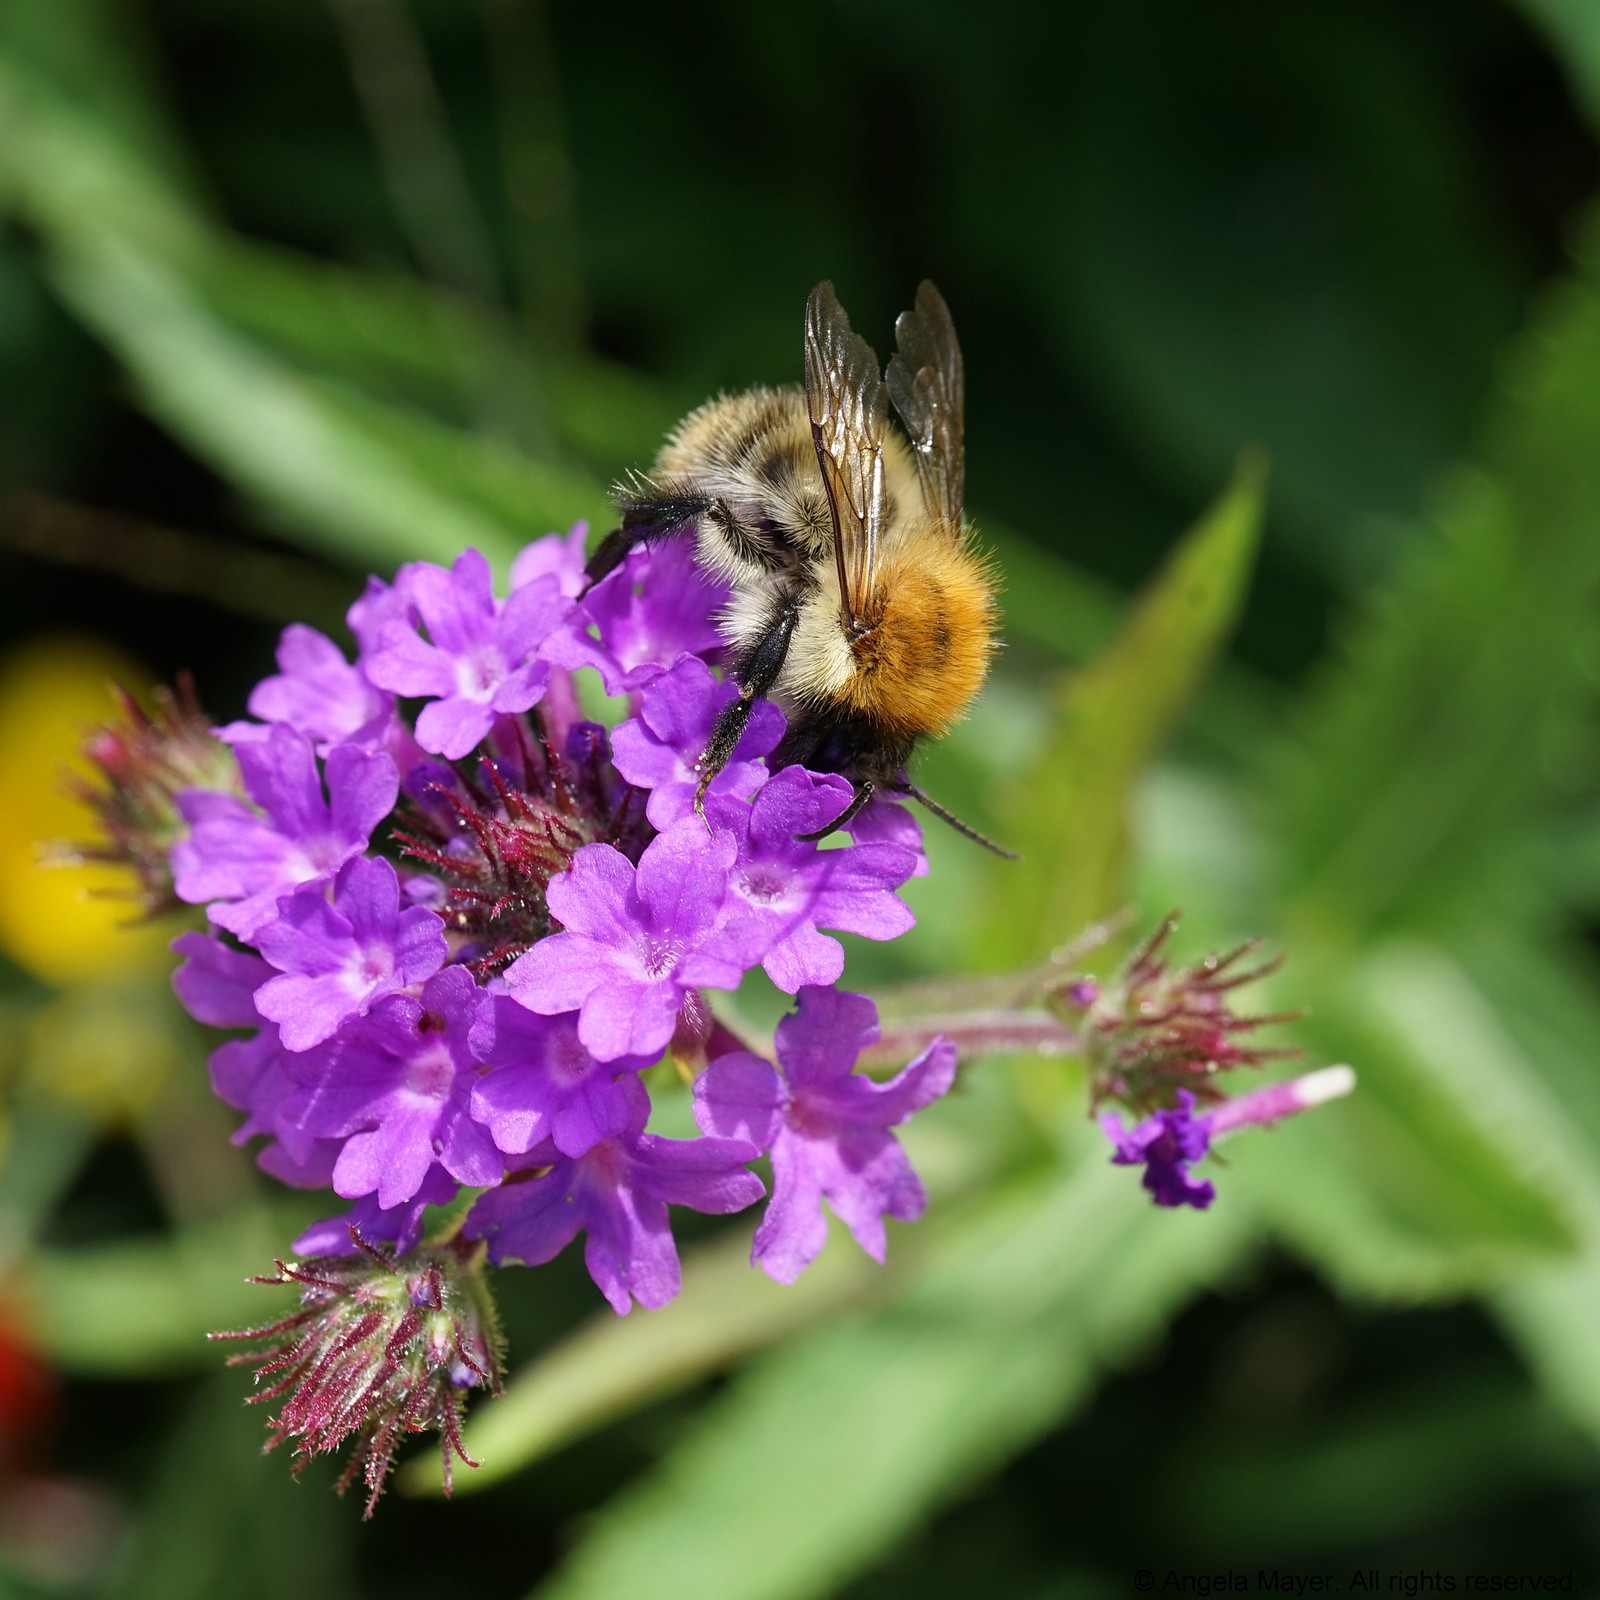 Bumblebee on Flower